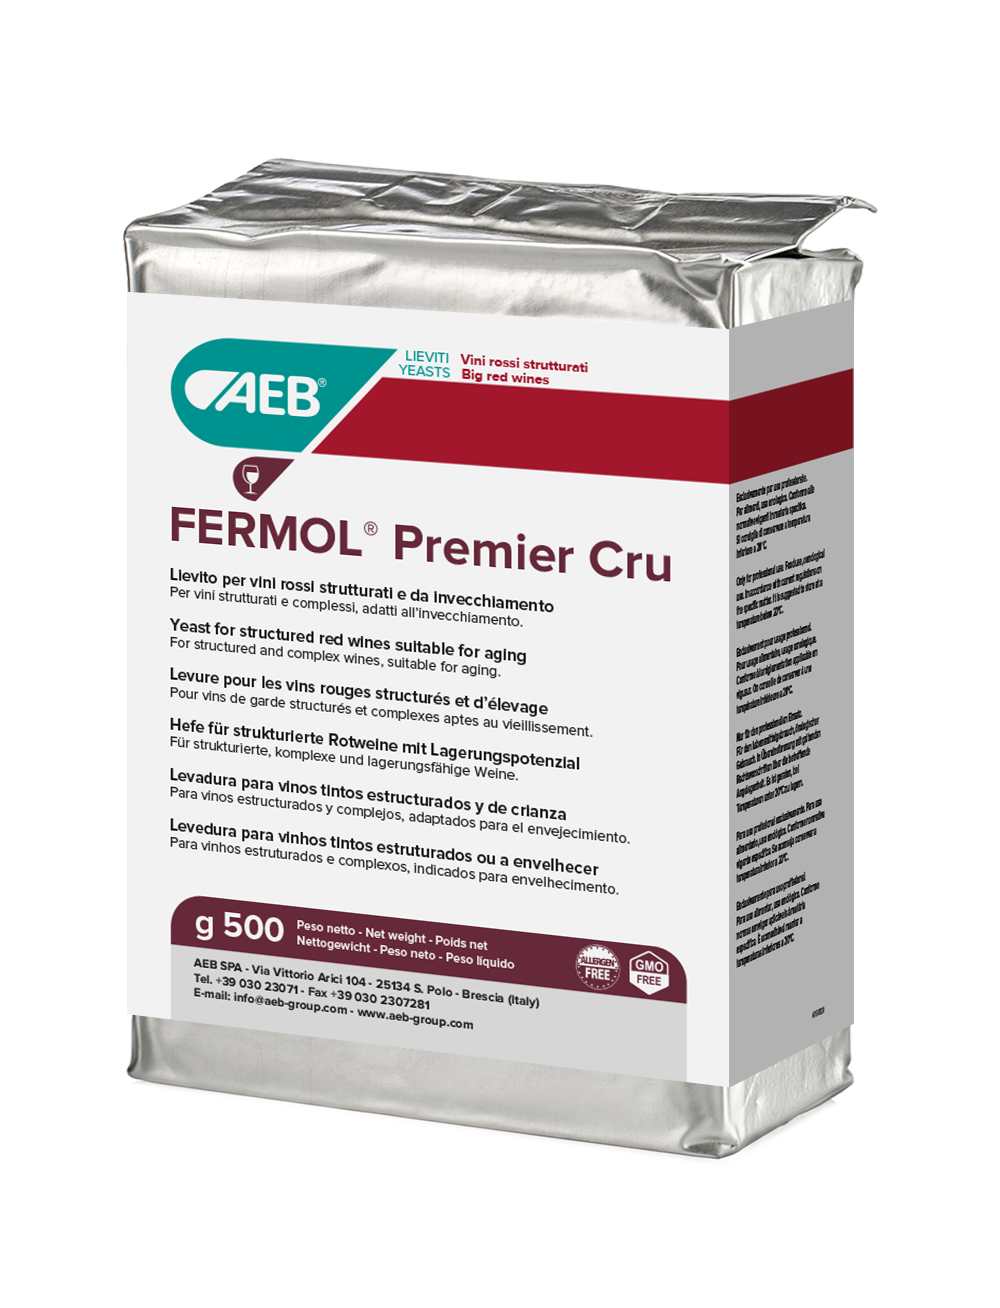 Llevats Fermol Premier Cru 1Kg